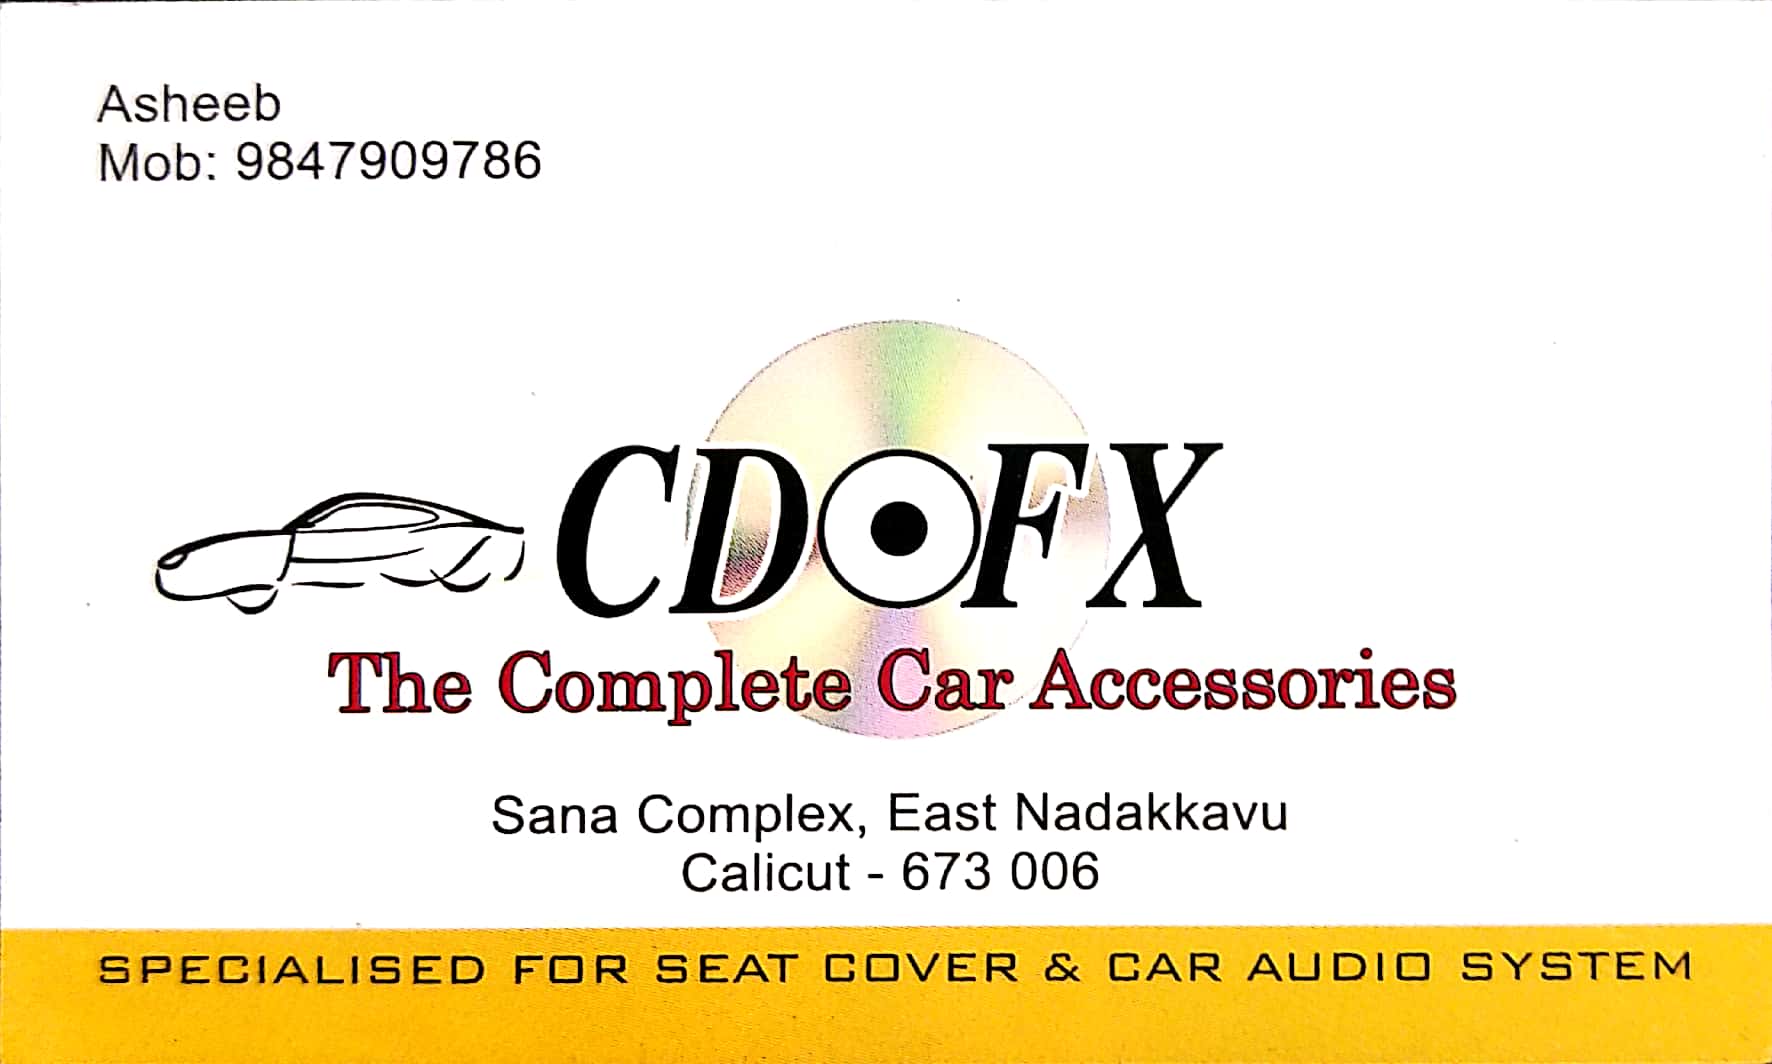 CD-FX The Complete Car Accessories, ACCESSORIES,  service in Nadakkavu, Kozhikode